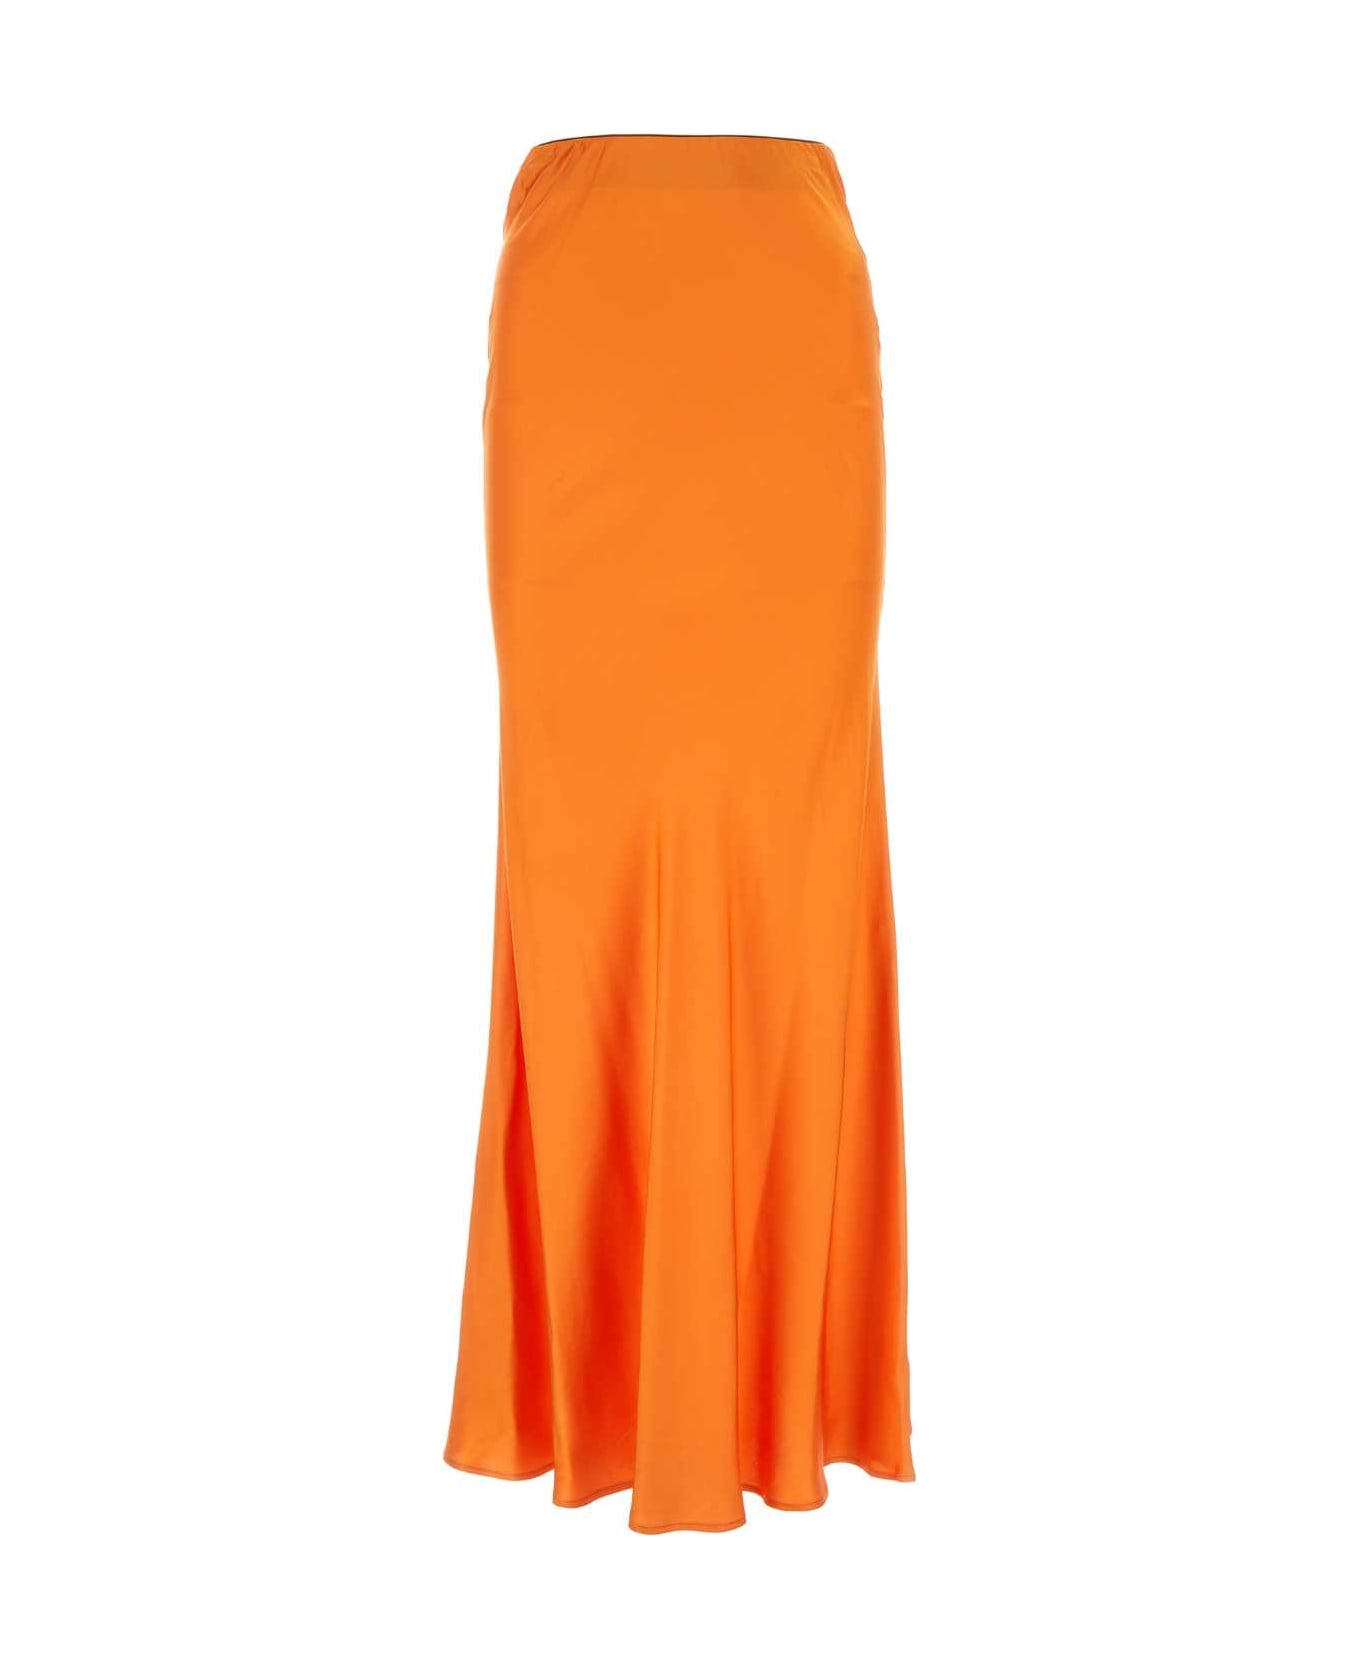 Hebe Studio Orange Satin Kate Skirt - ORANGE